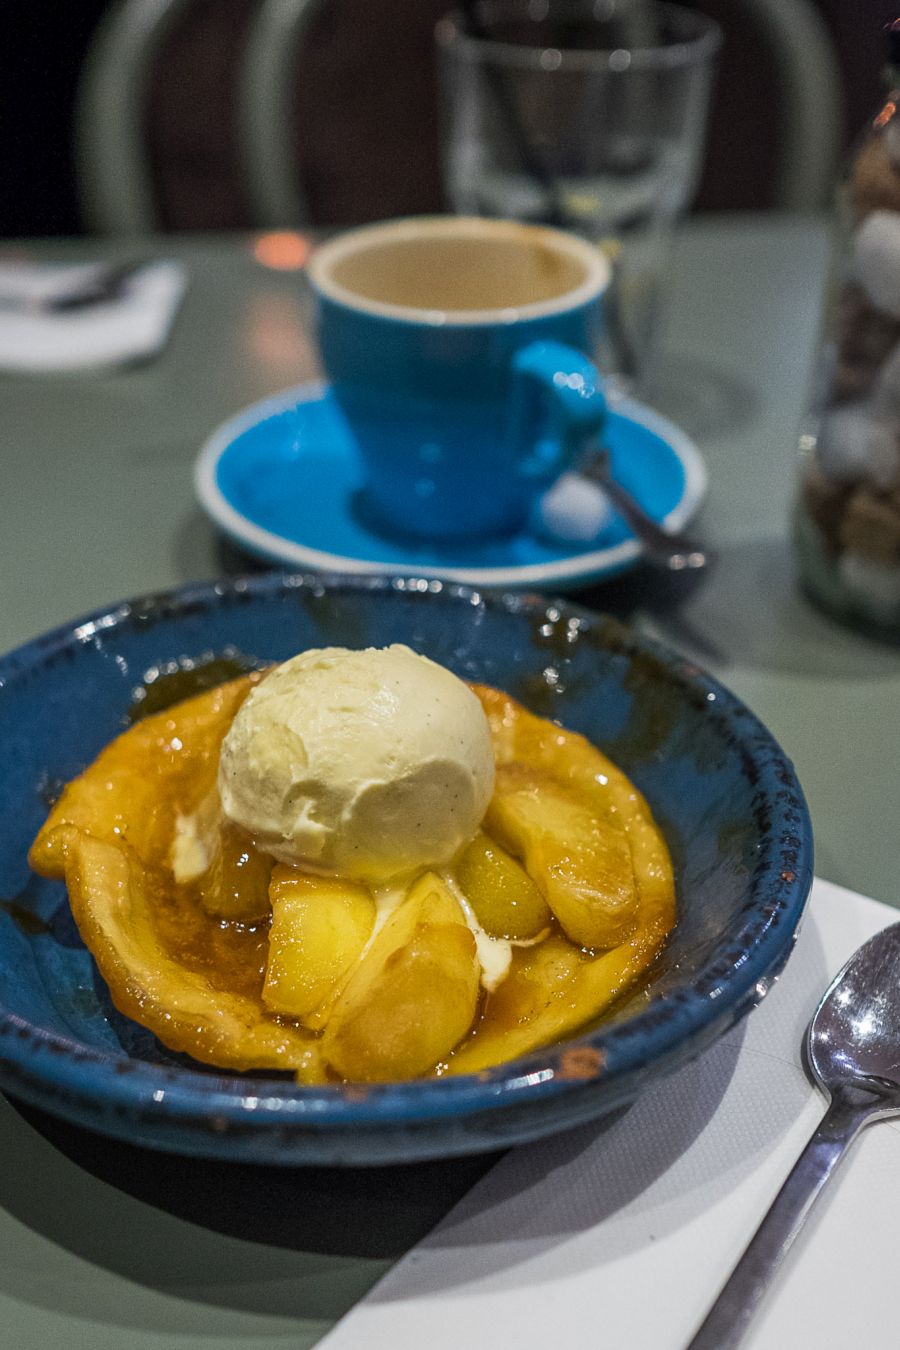 Apple tarte tatin with vanilla ice cream (dessert special, AU$14)